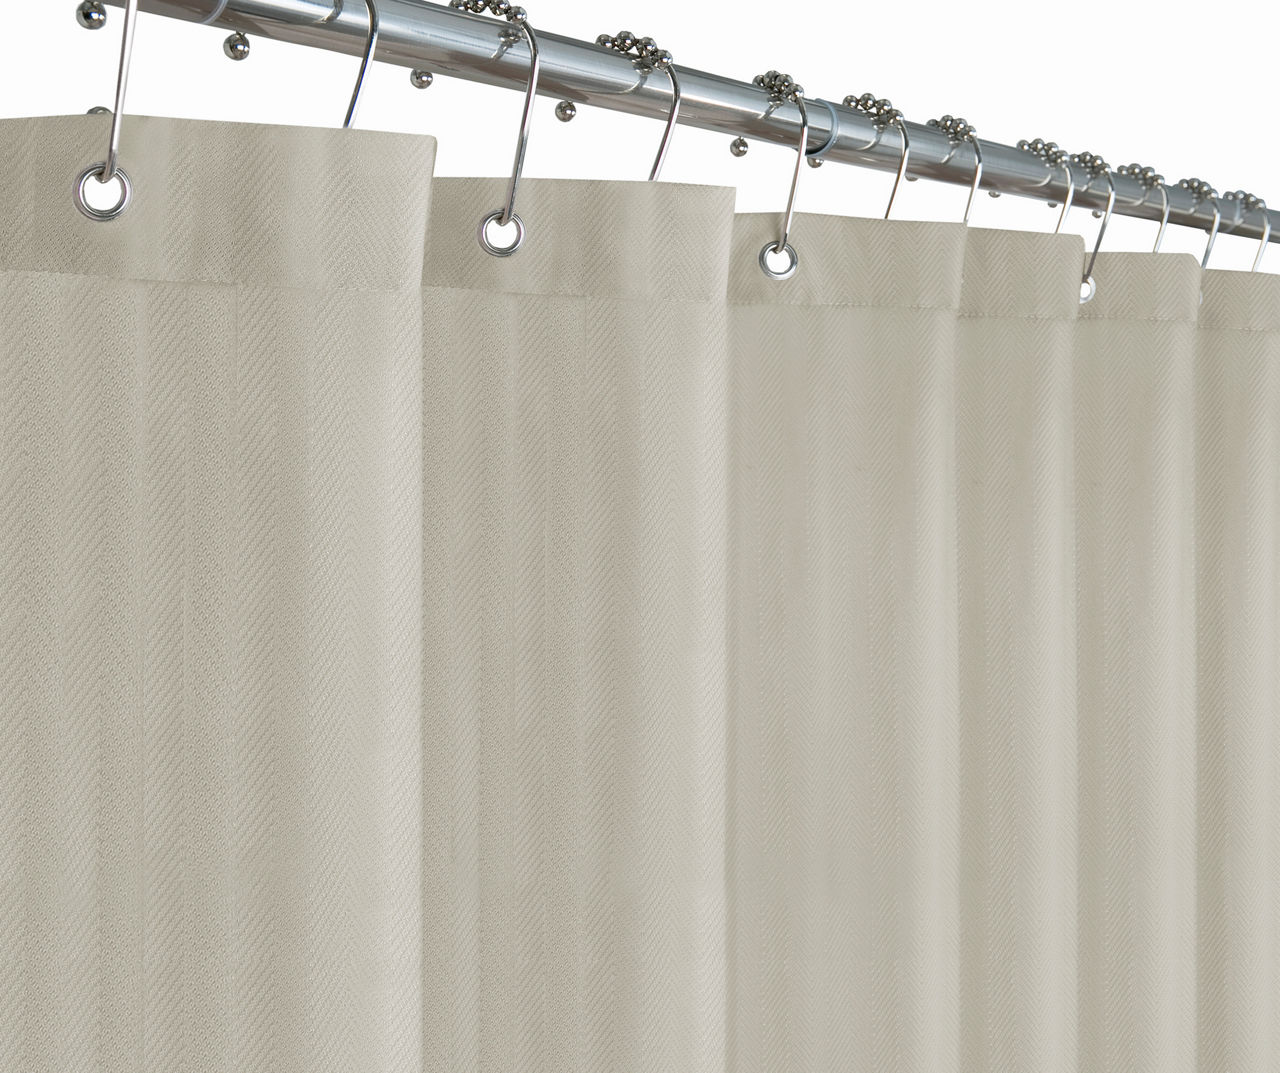 NEW Louis Vuitton logo diamond black Shower Curtain Sets • Kybershop